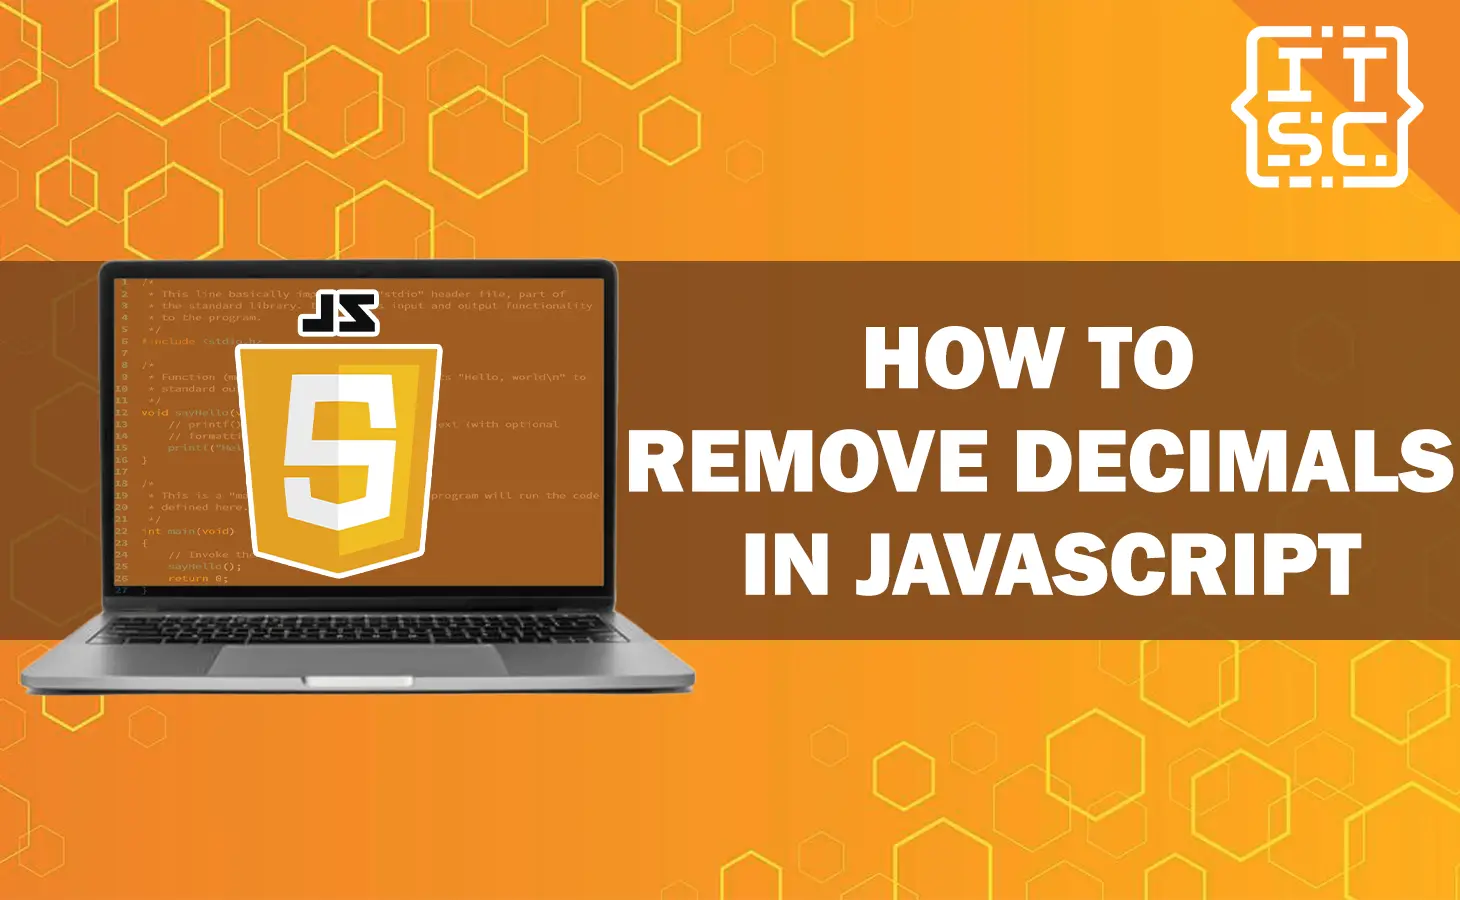 How to remove decimals in JavaScript